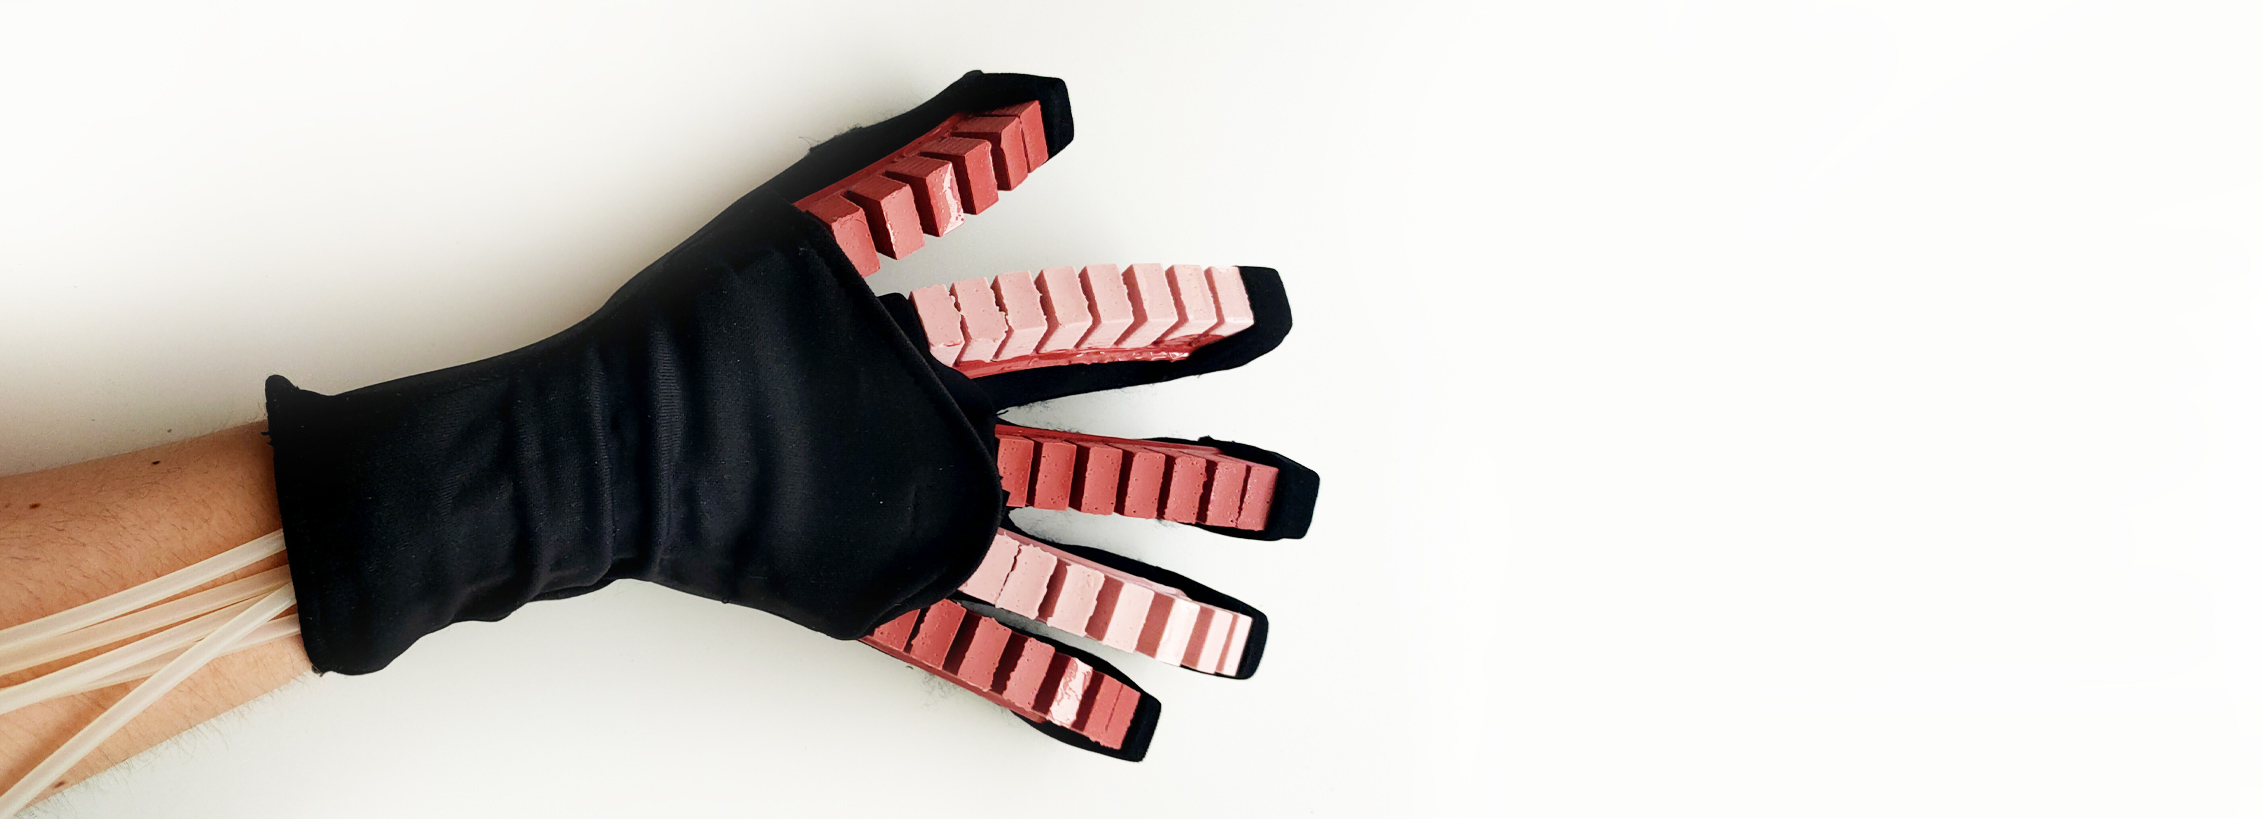 Projeto Soft robotic glove